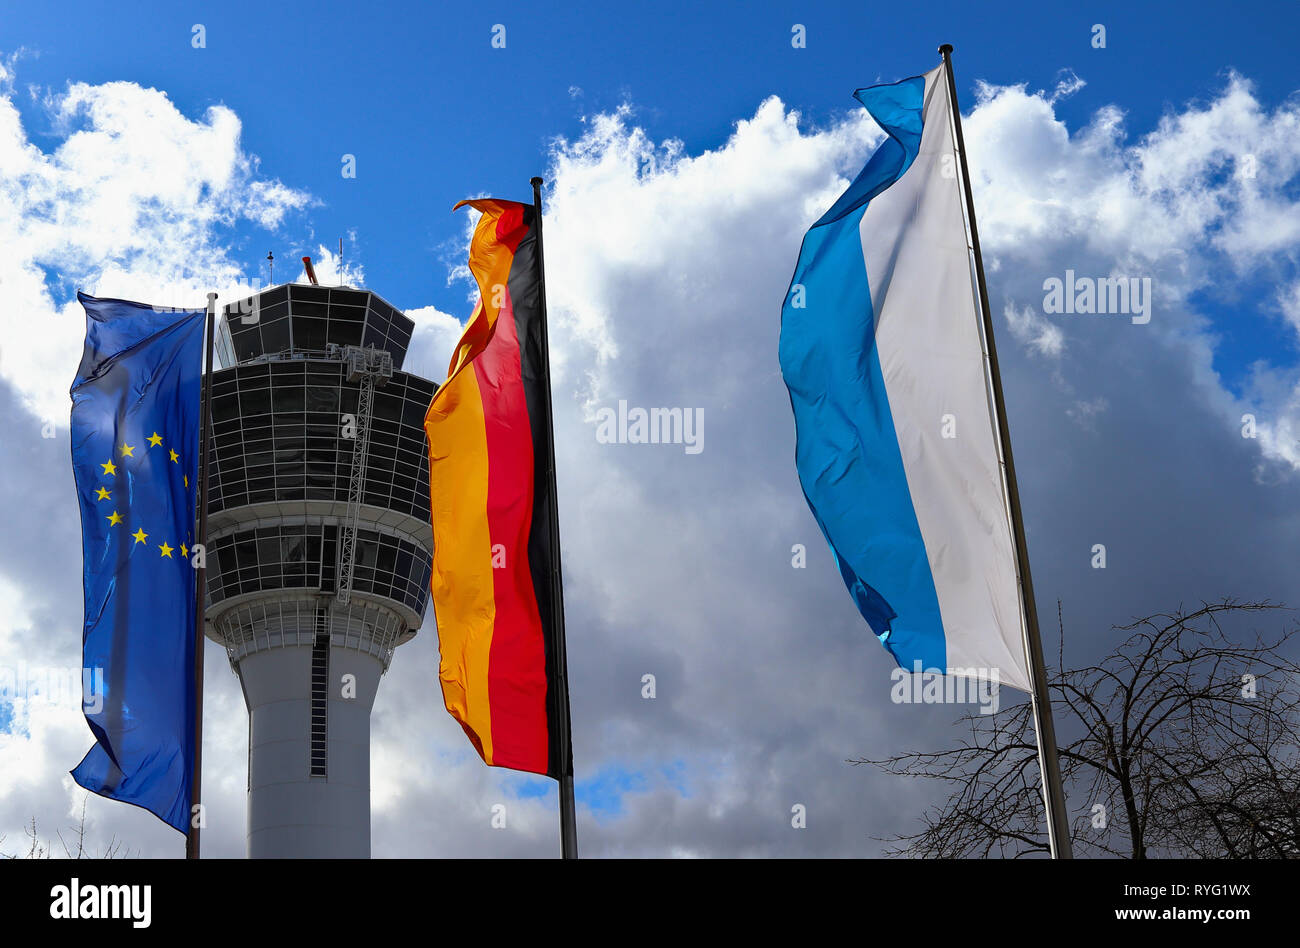 MUNICH AIRPORT, BAVARIA, GERMANY - MARCH 13, 2019: EU flag, flag of Germany and Bavaria state flag. In the background Air Traffic Control Tower. Stock Photo